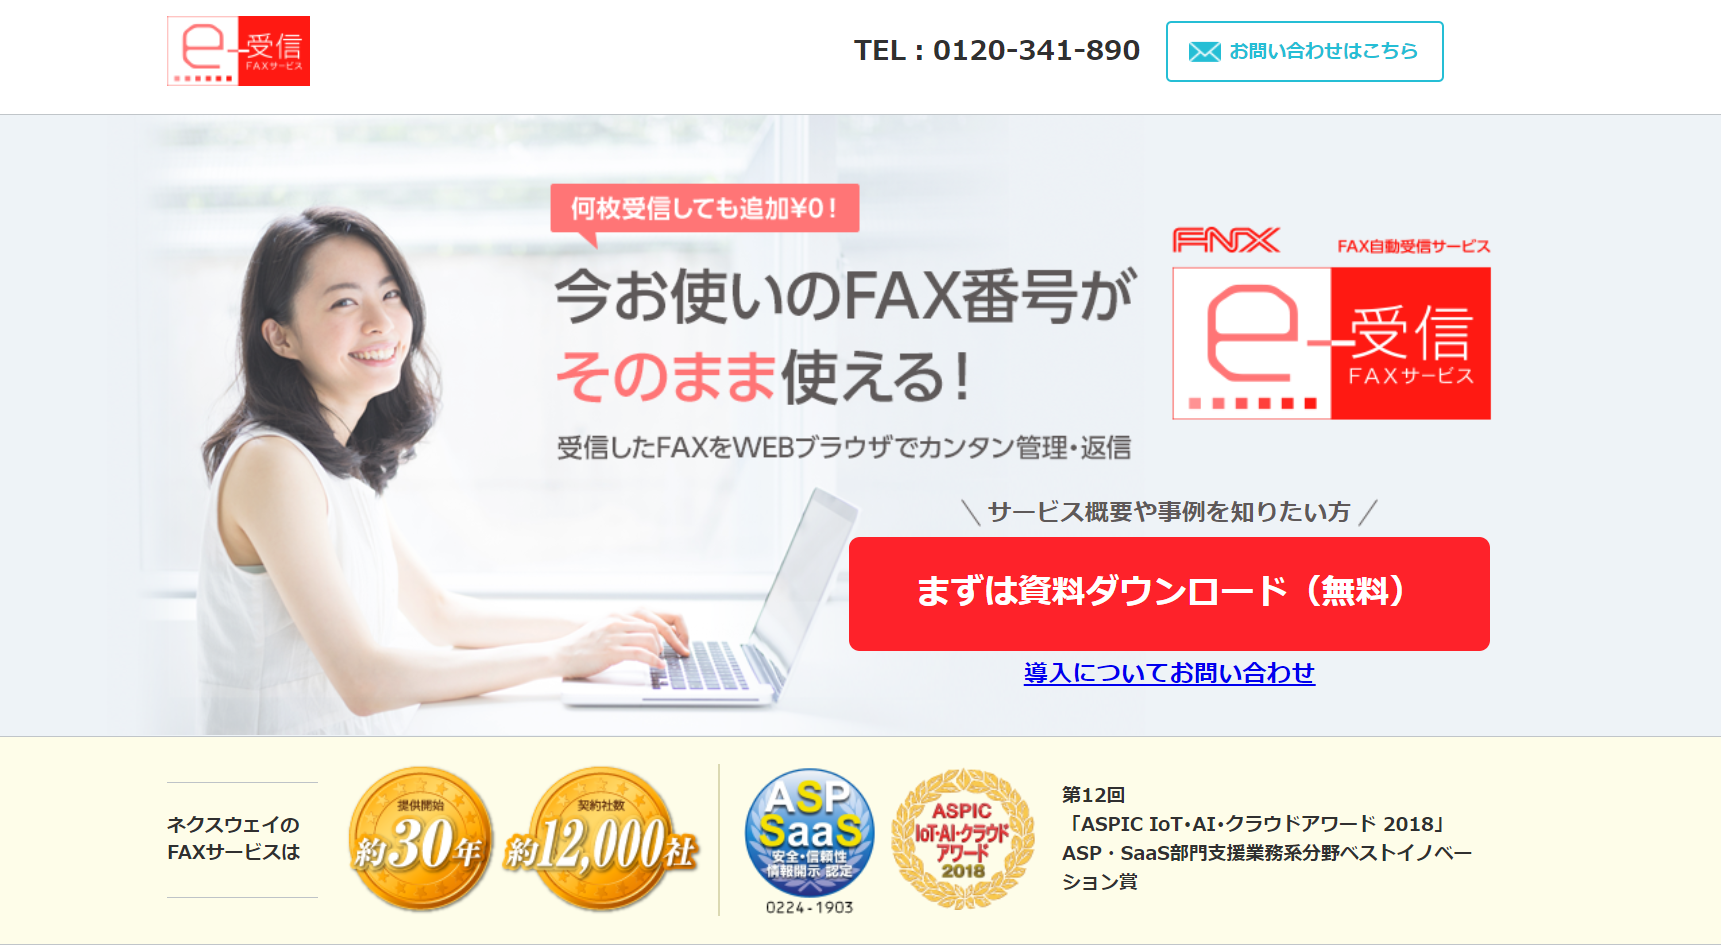 FNX e-受信FAXサービス公式Webサイト